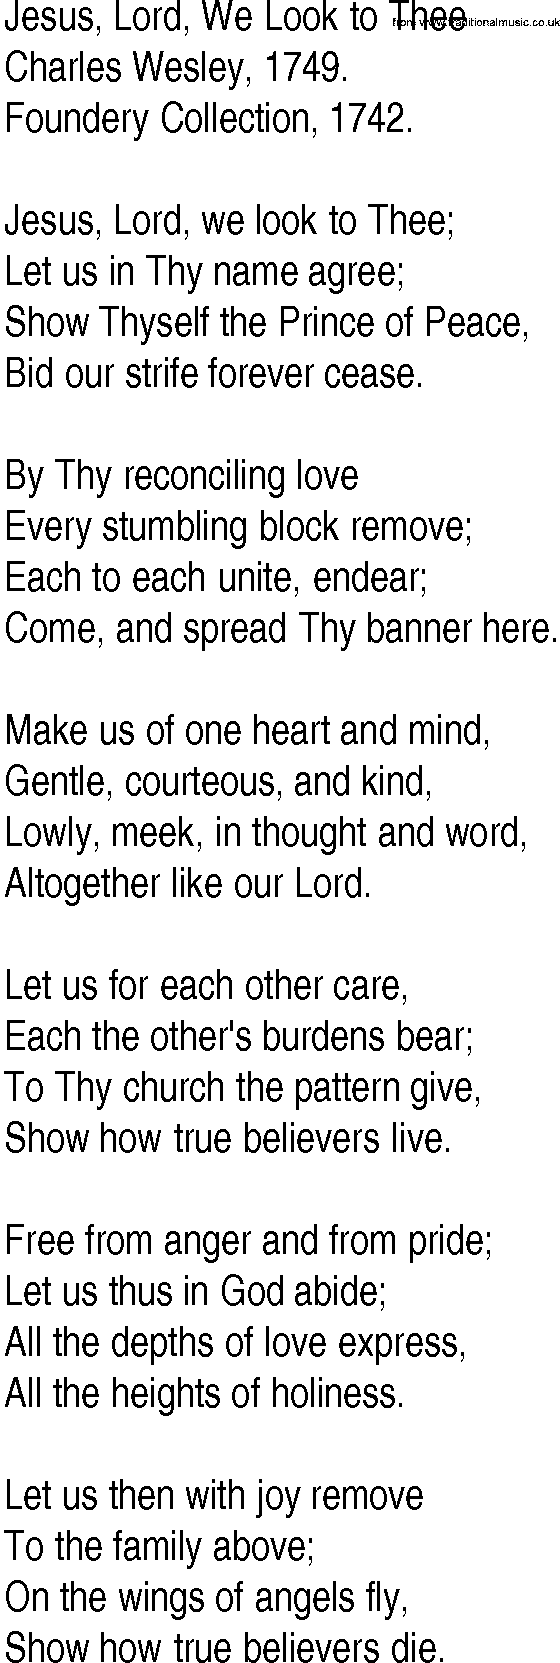 Hymn and Gospel Song: Jesus, Lord, We Look to Thee by Charles Wesley lyrics